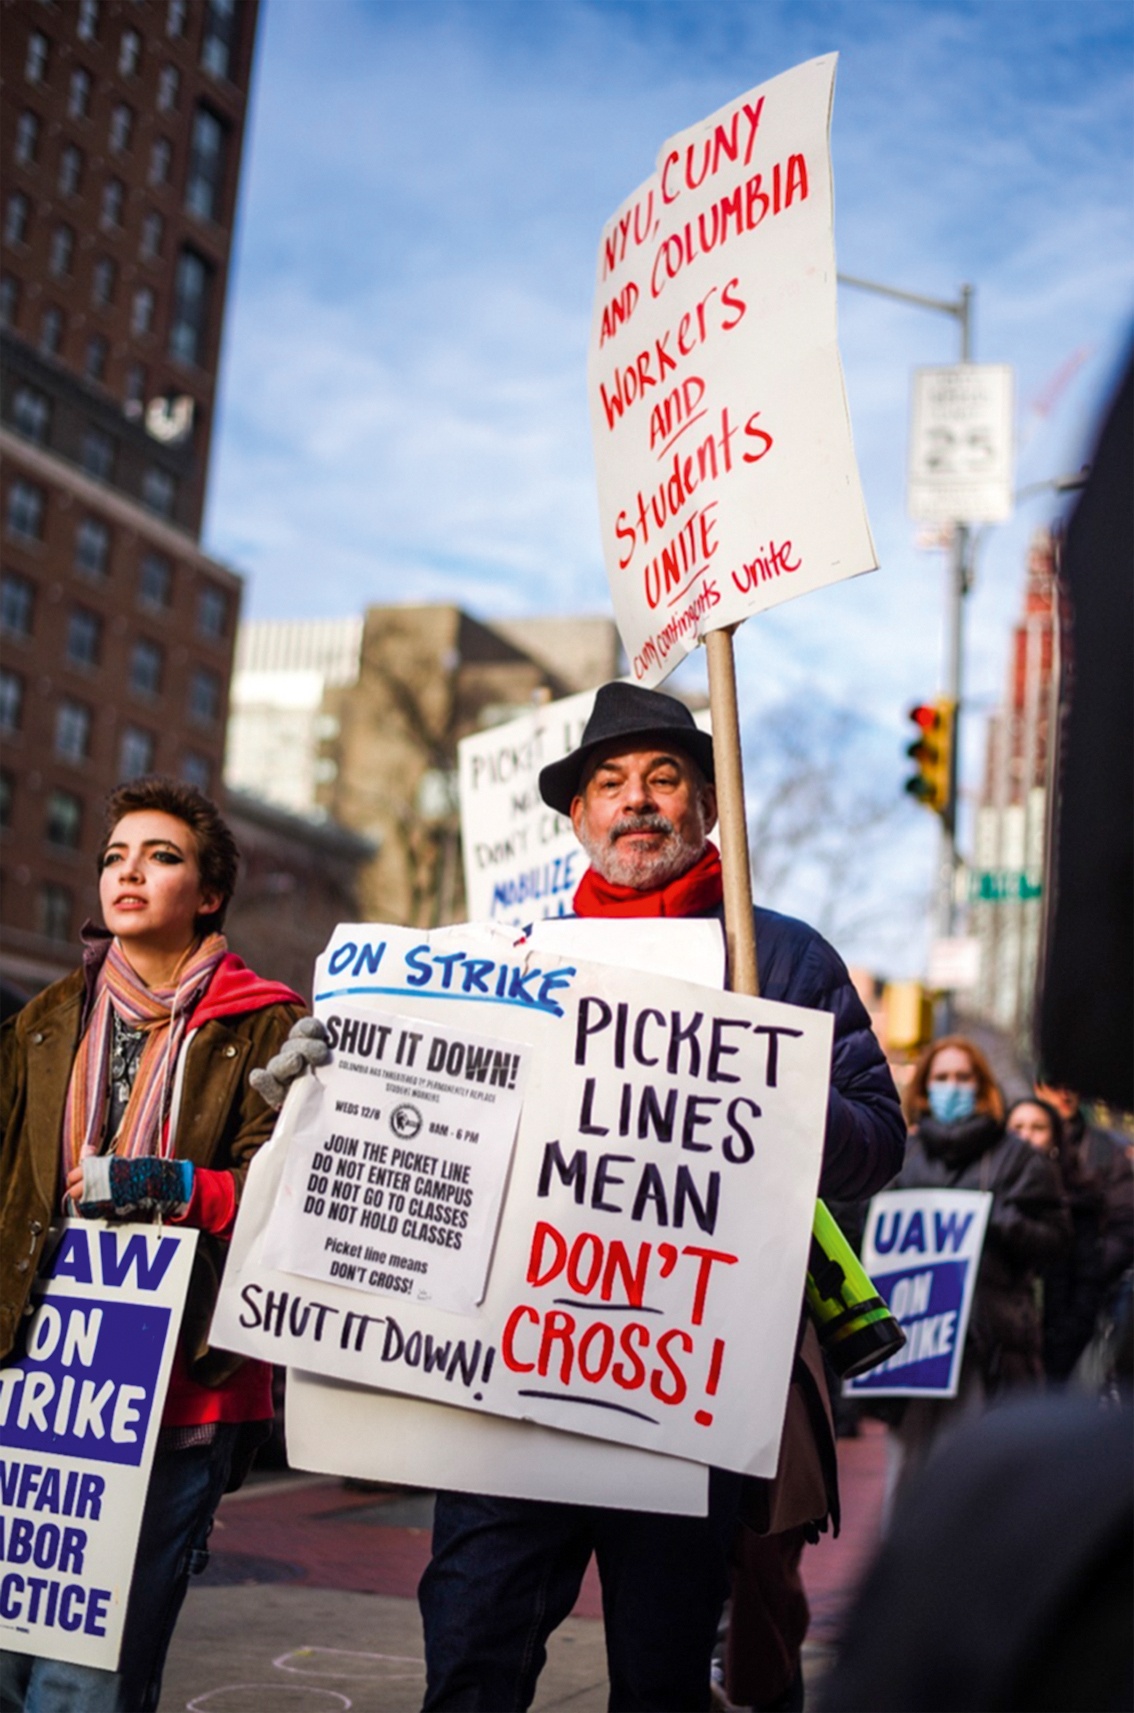 Columbia-University-Streik / strike, New York, 2021